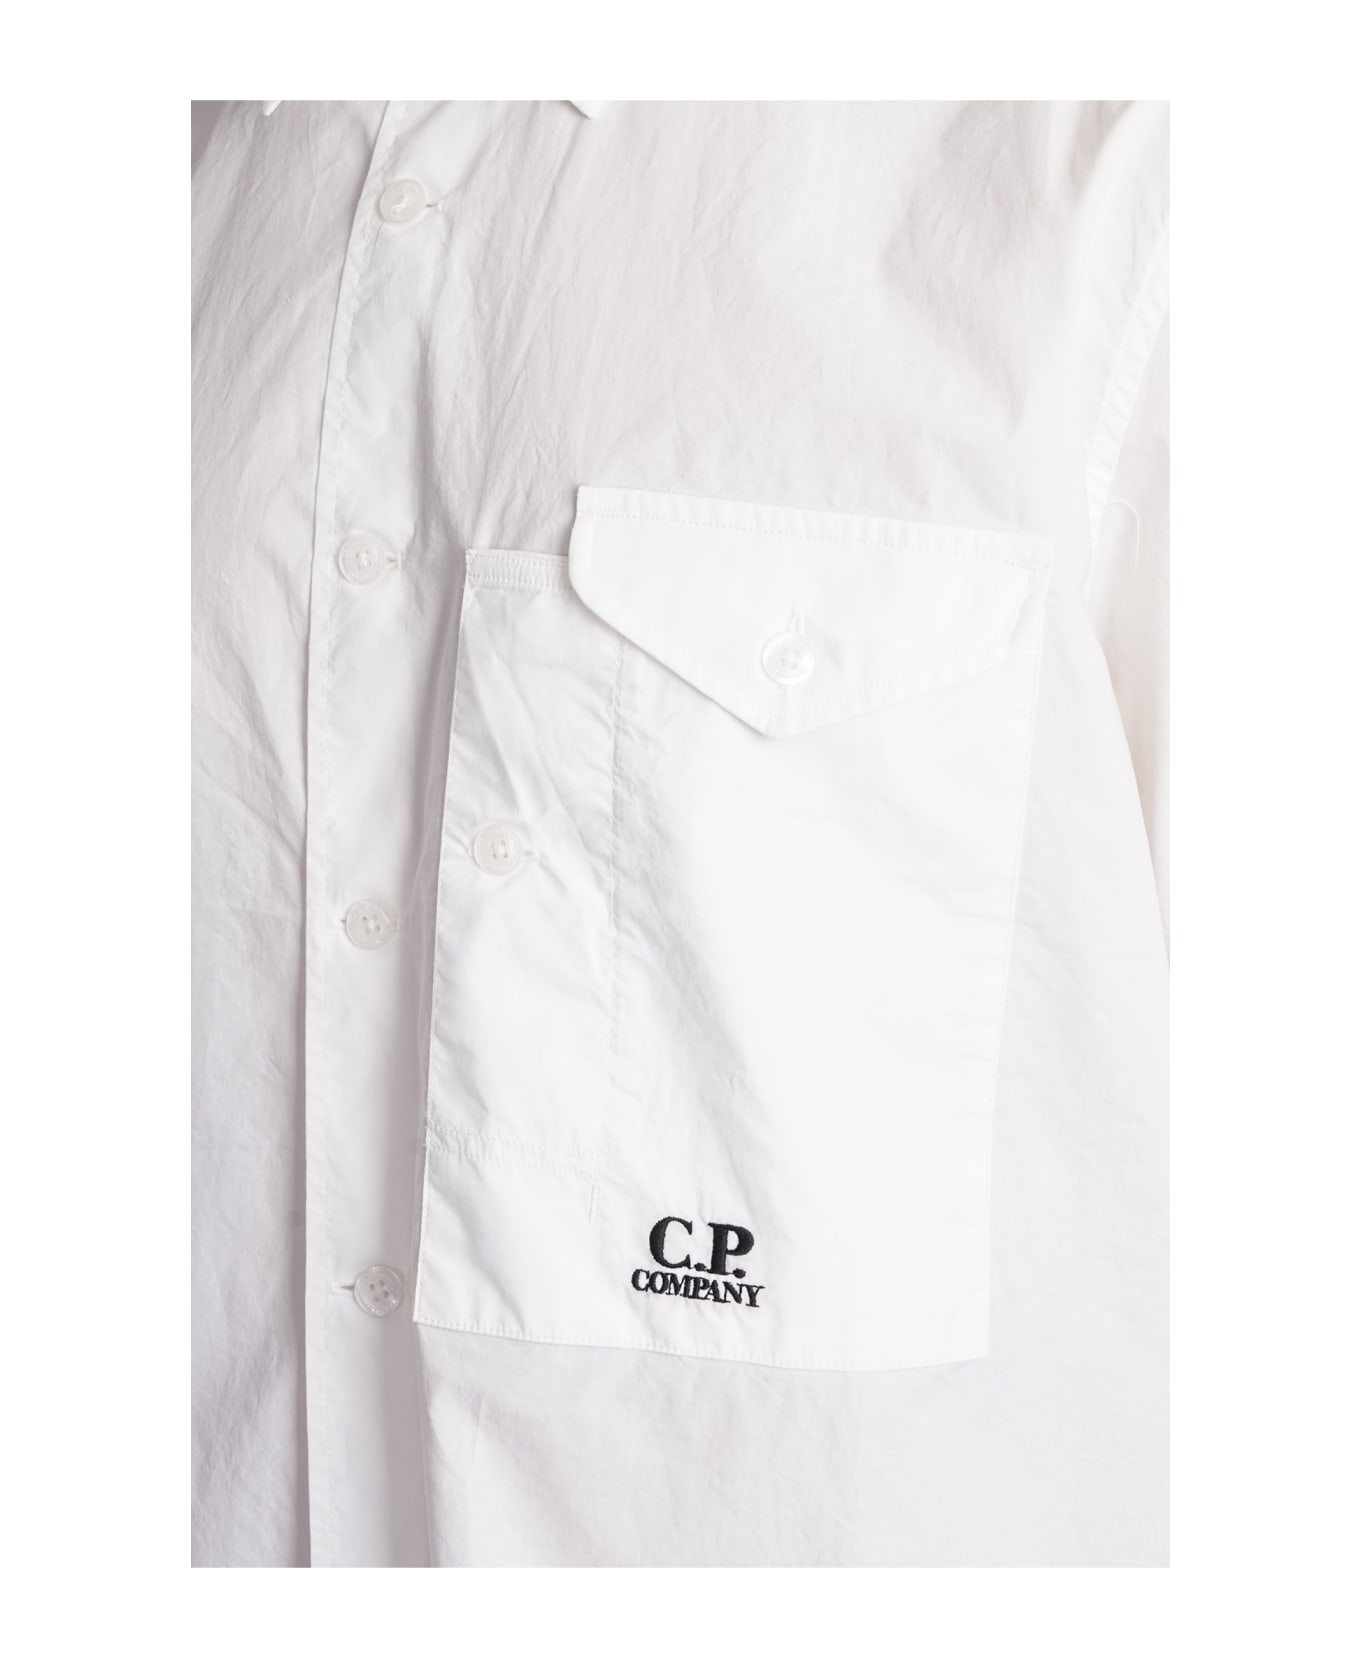 C.P. Company Logo Embroidery Shirt - GAUZEWHITE シャツ